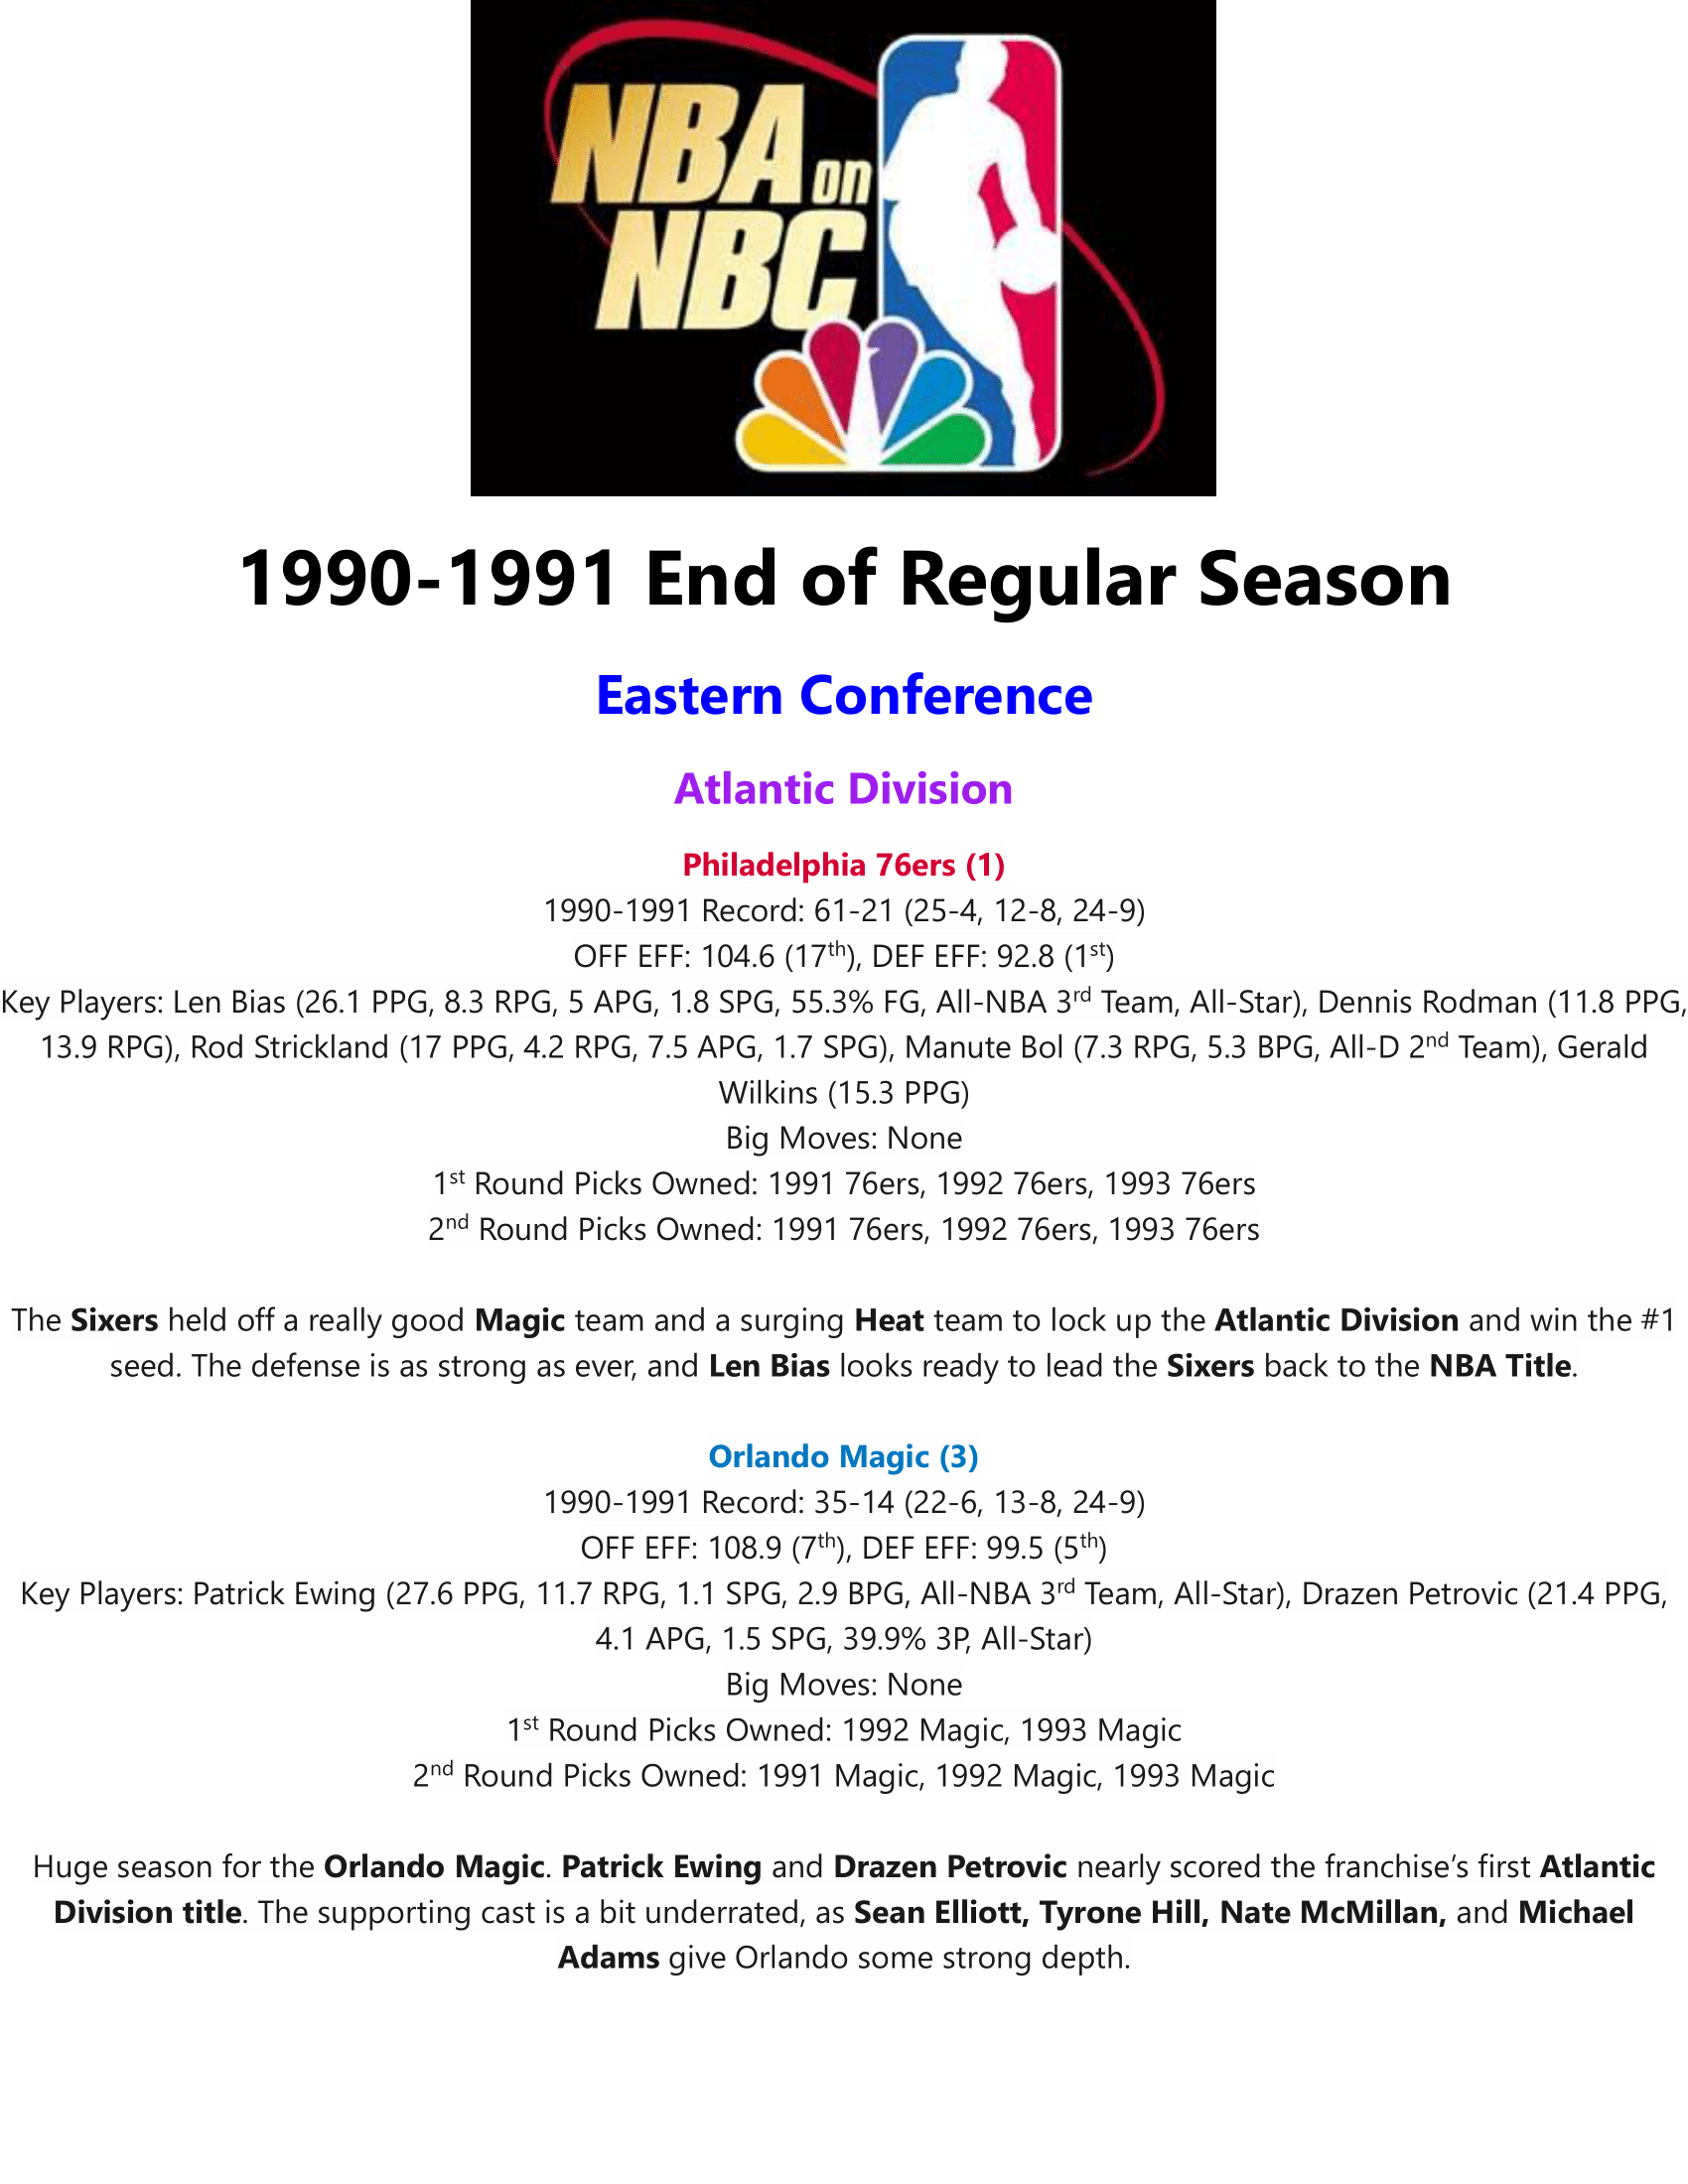 90-91-Part-3-End-of-Regular-Season-01.png